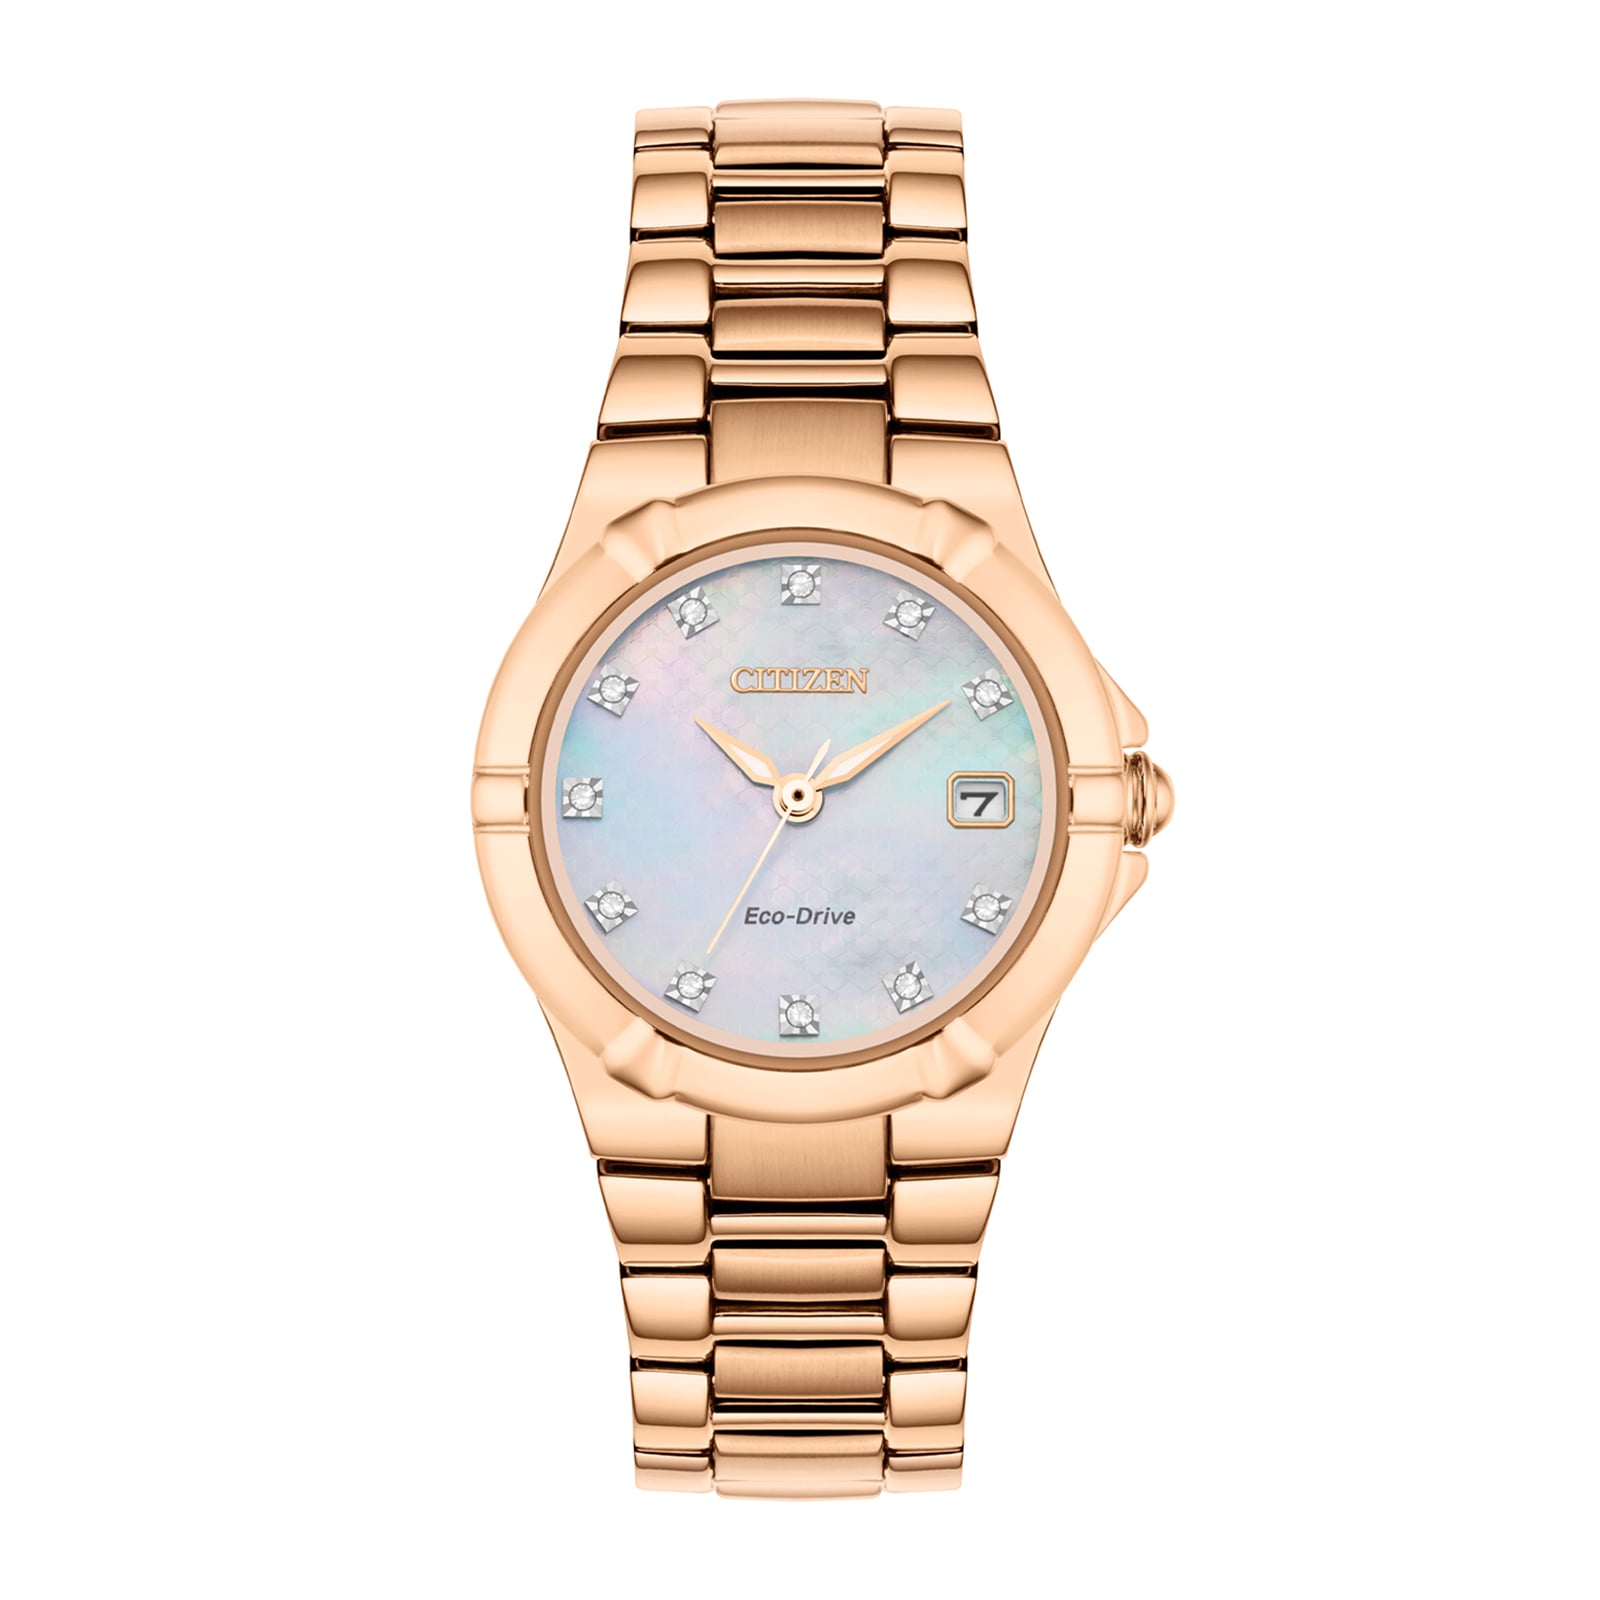 Rolex watch | Rolex Datejust 26mm - Gold Women's Watch | Medusa jewelry